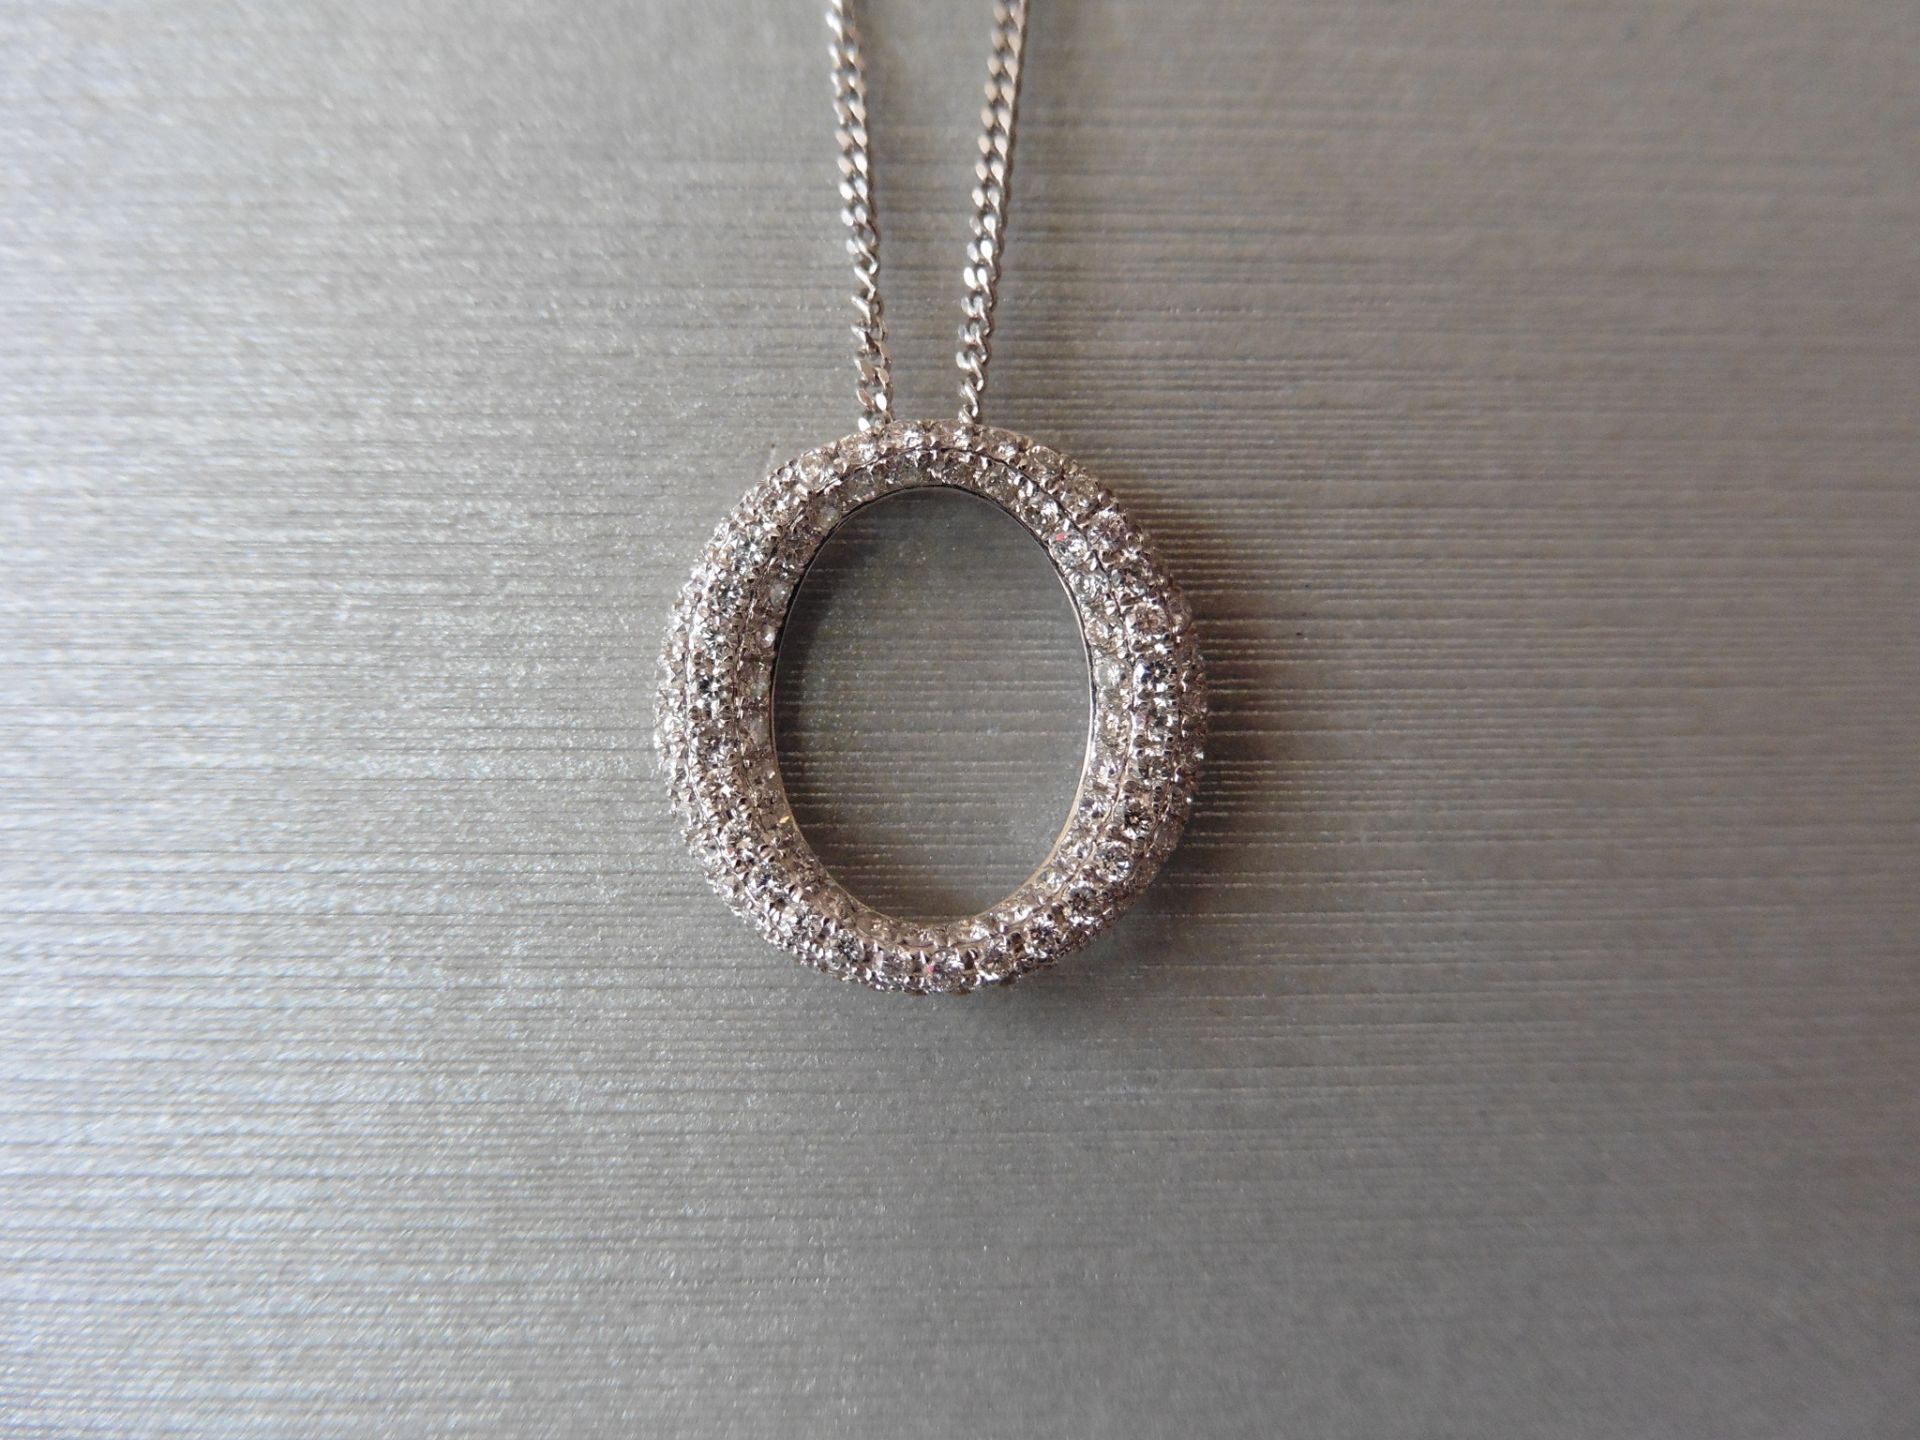 18ct white gold diamond set pendant in an 'o' design. Set with tiny brilliant cut diamonds